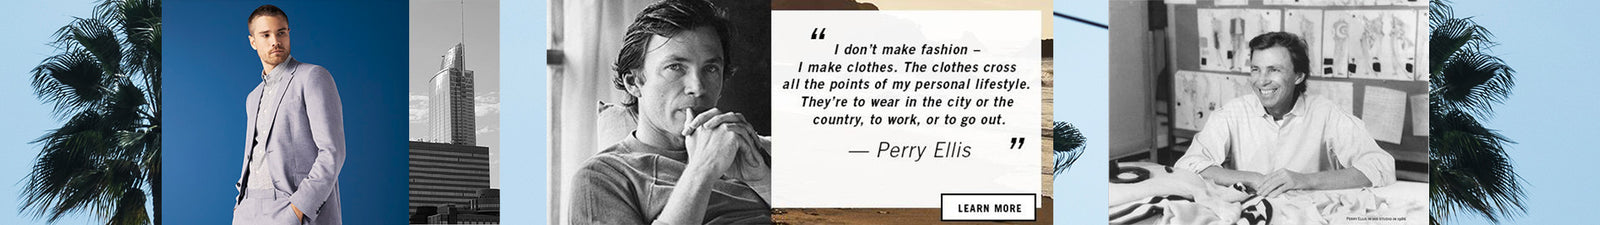 I don't make fashion - I make clothes. - PERRY ELLIS